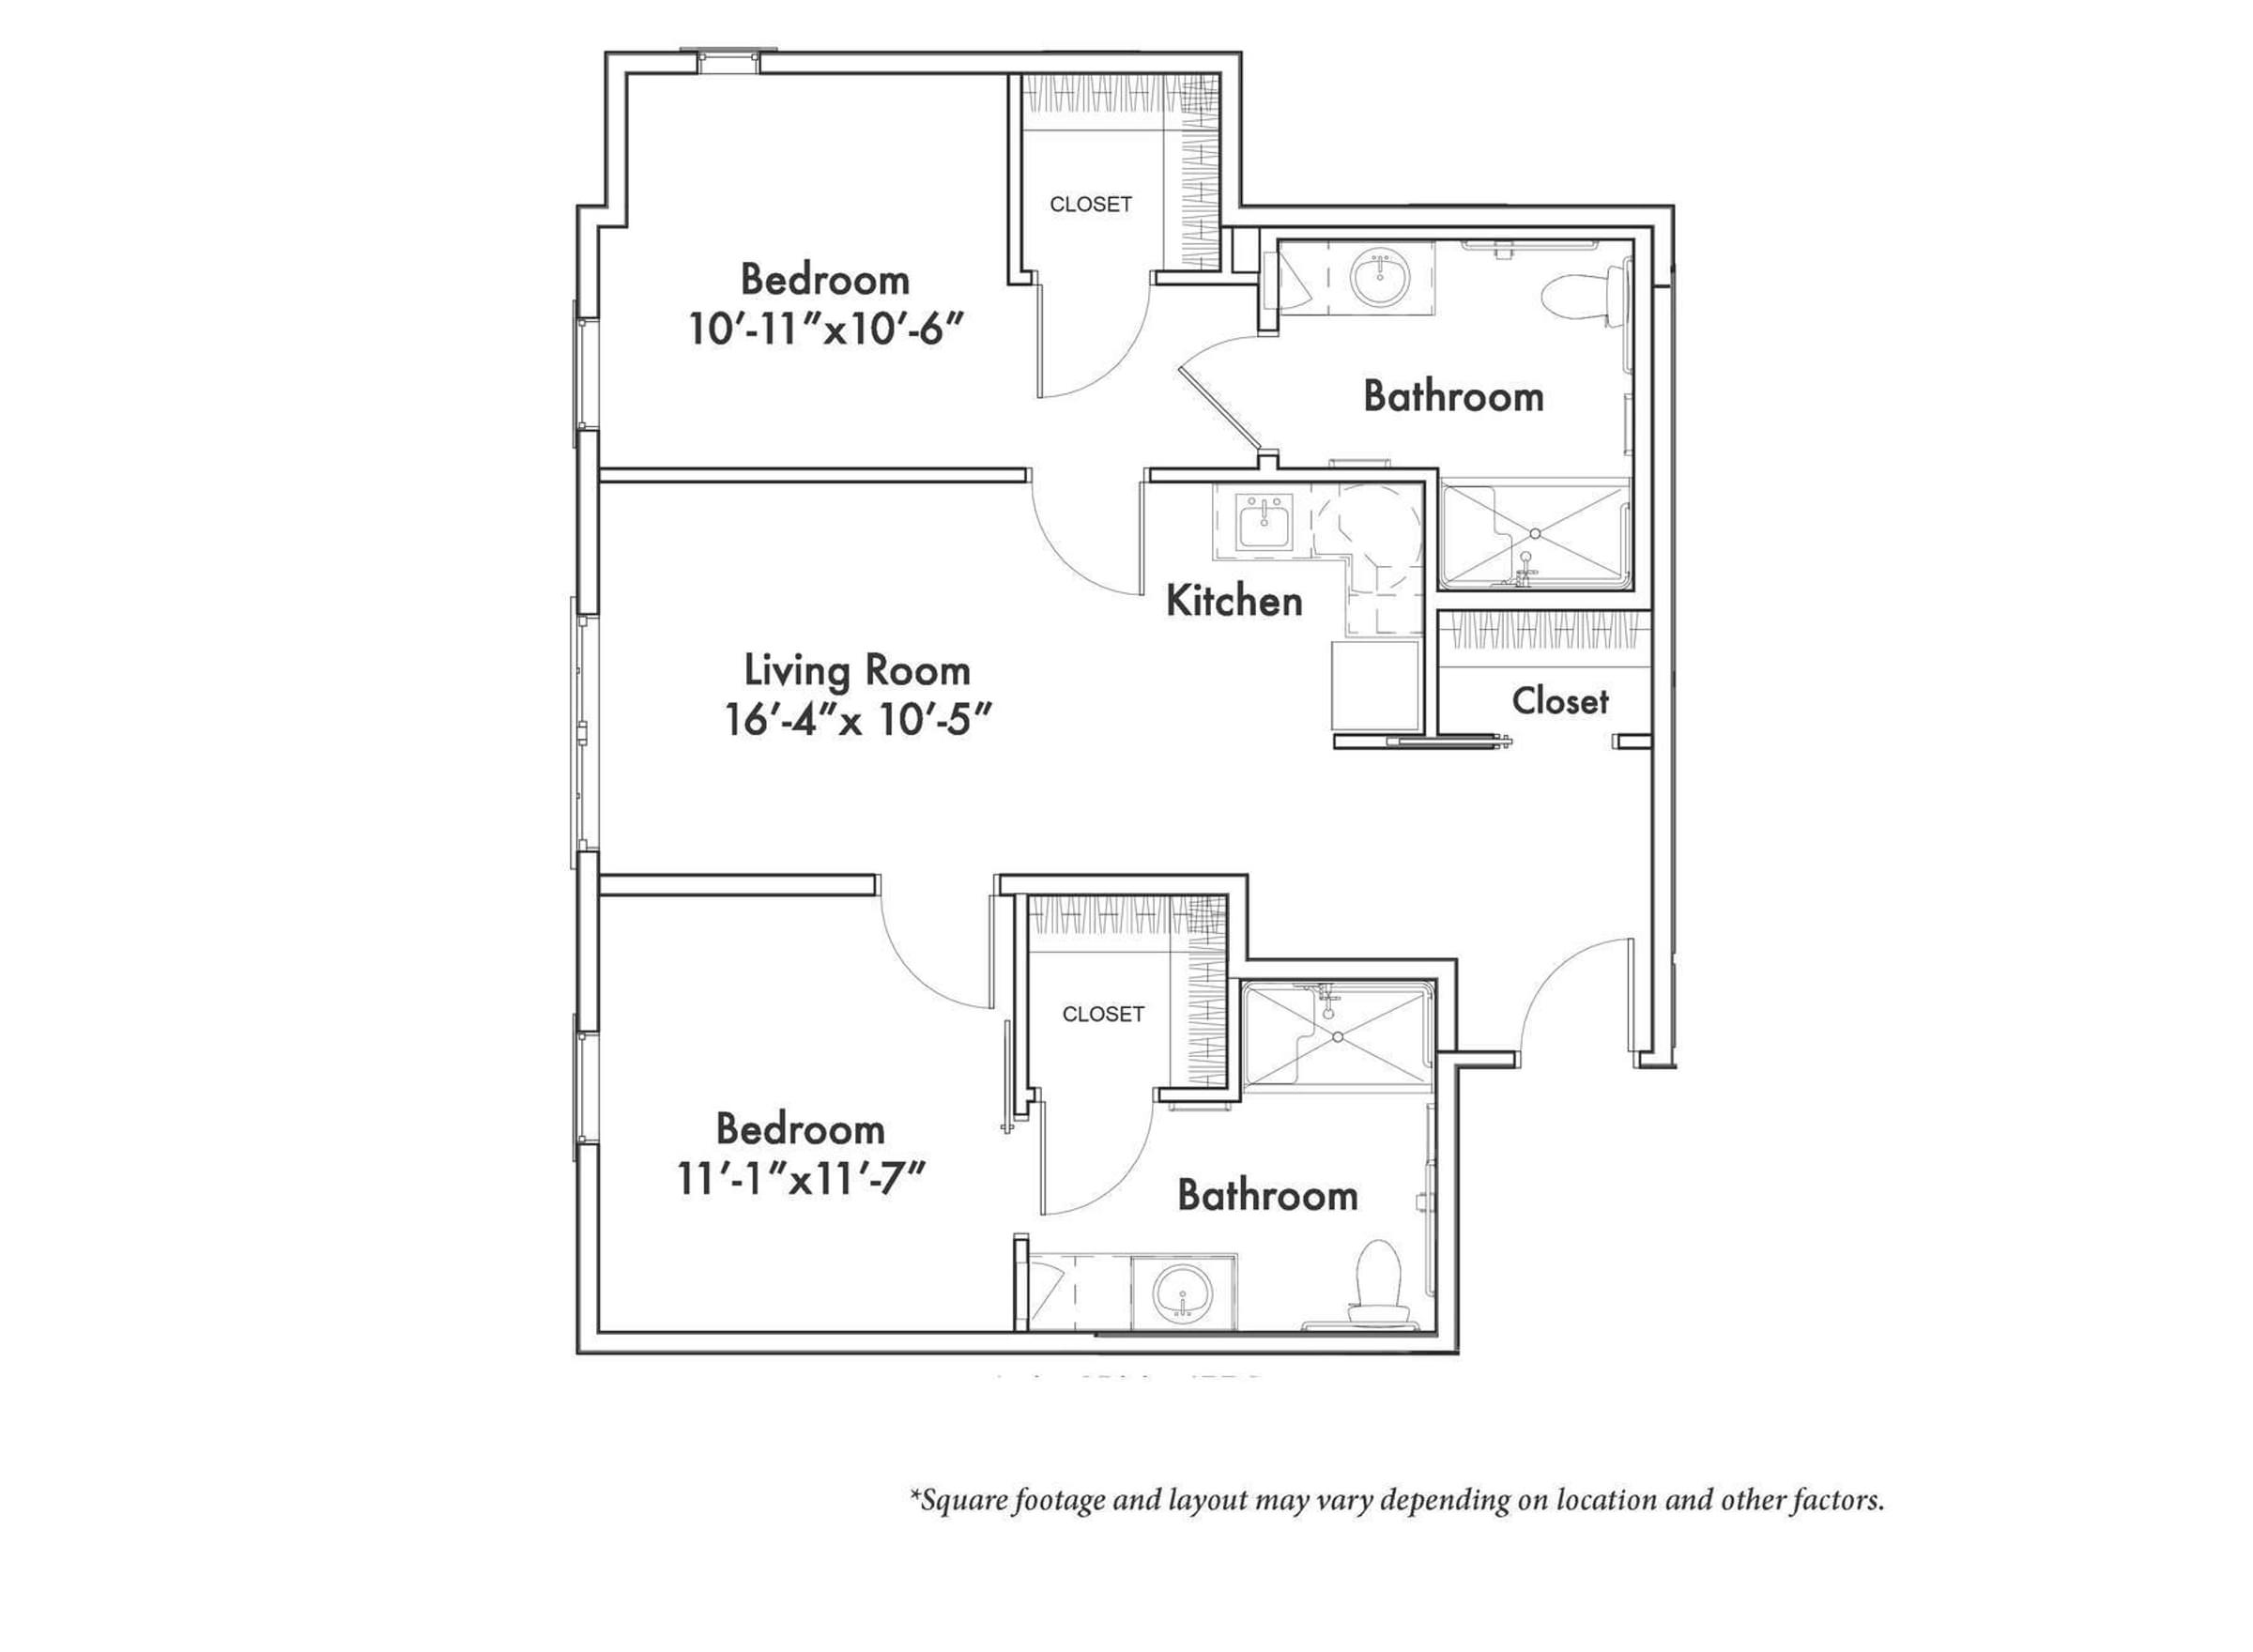 The Claiborne at Shoe Creek senior living community two-bedroom floor plan